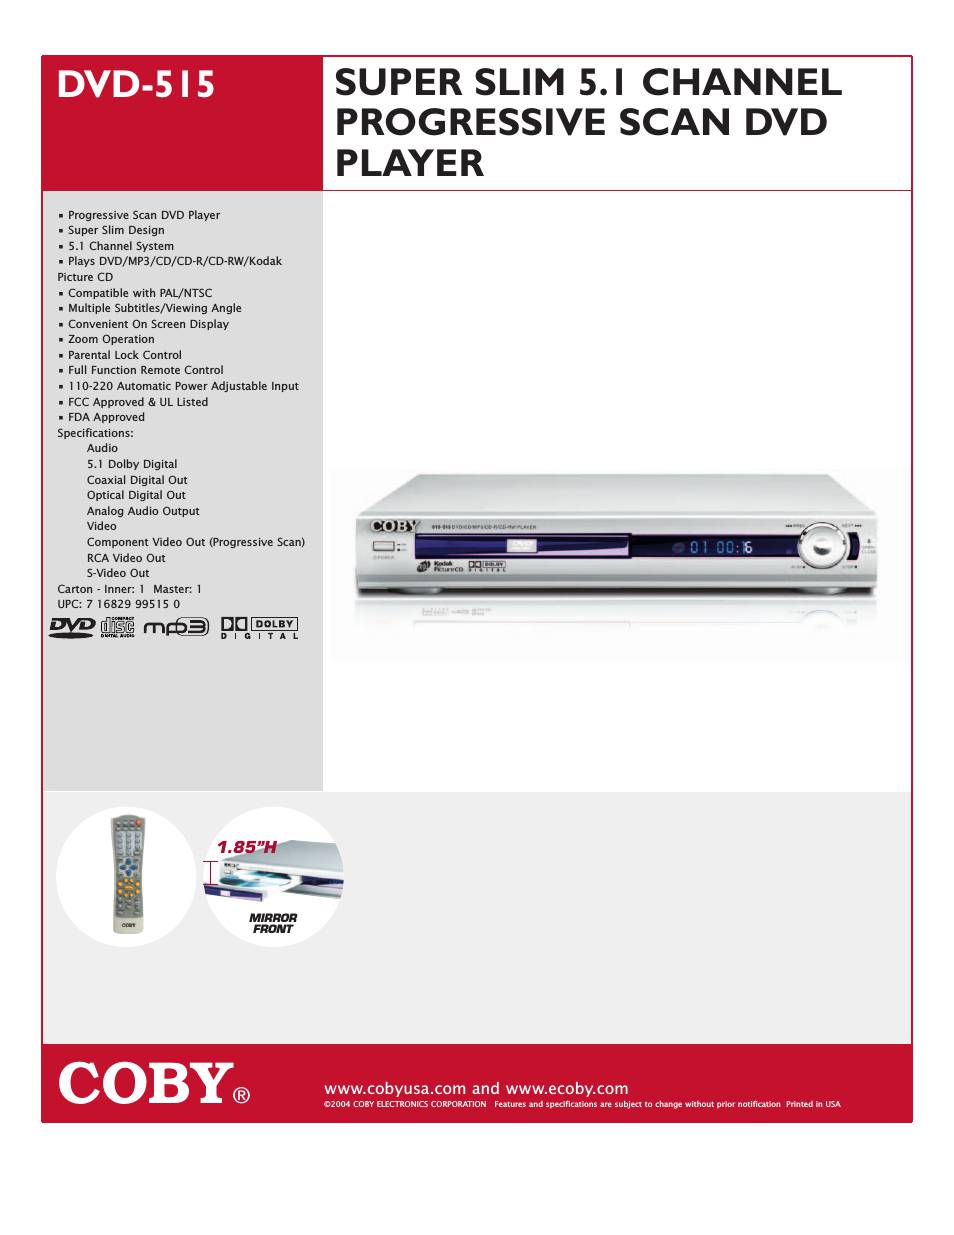 Coby DVD-515